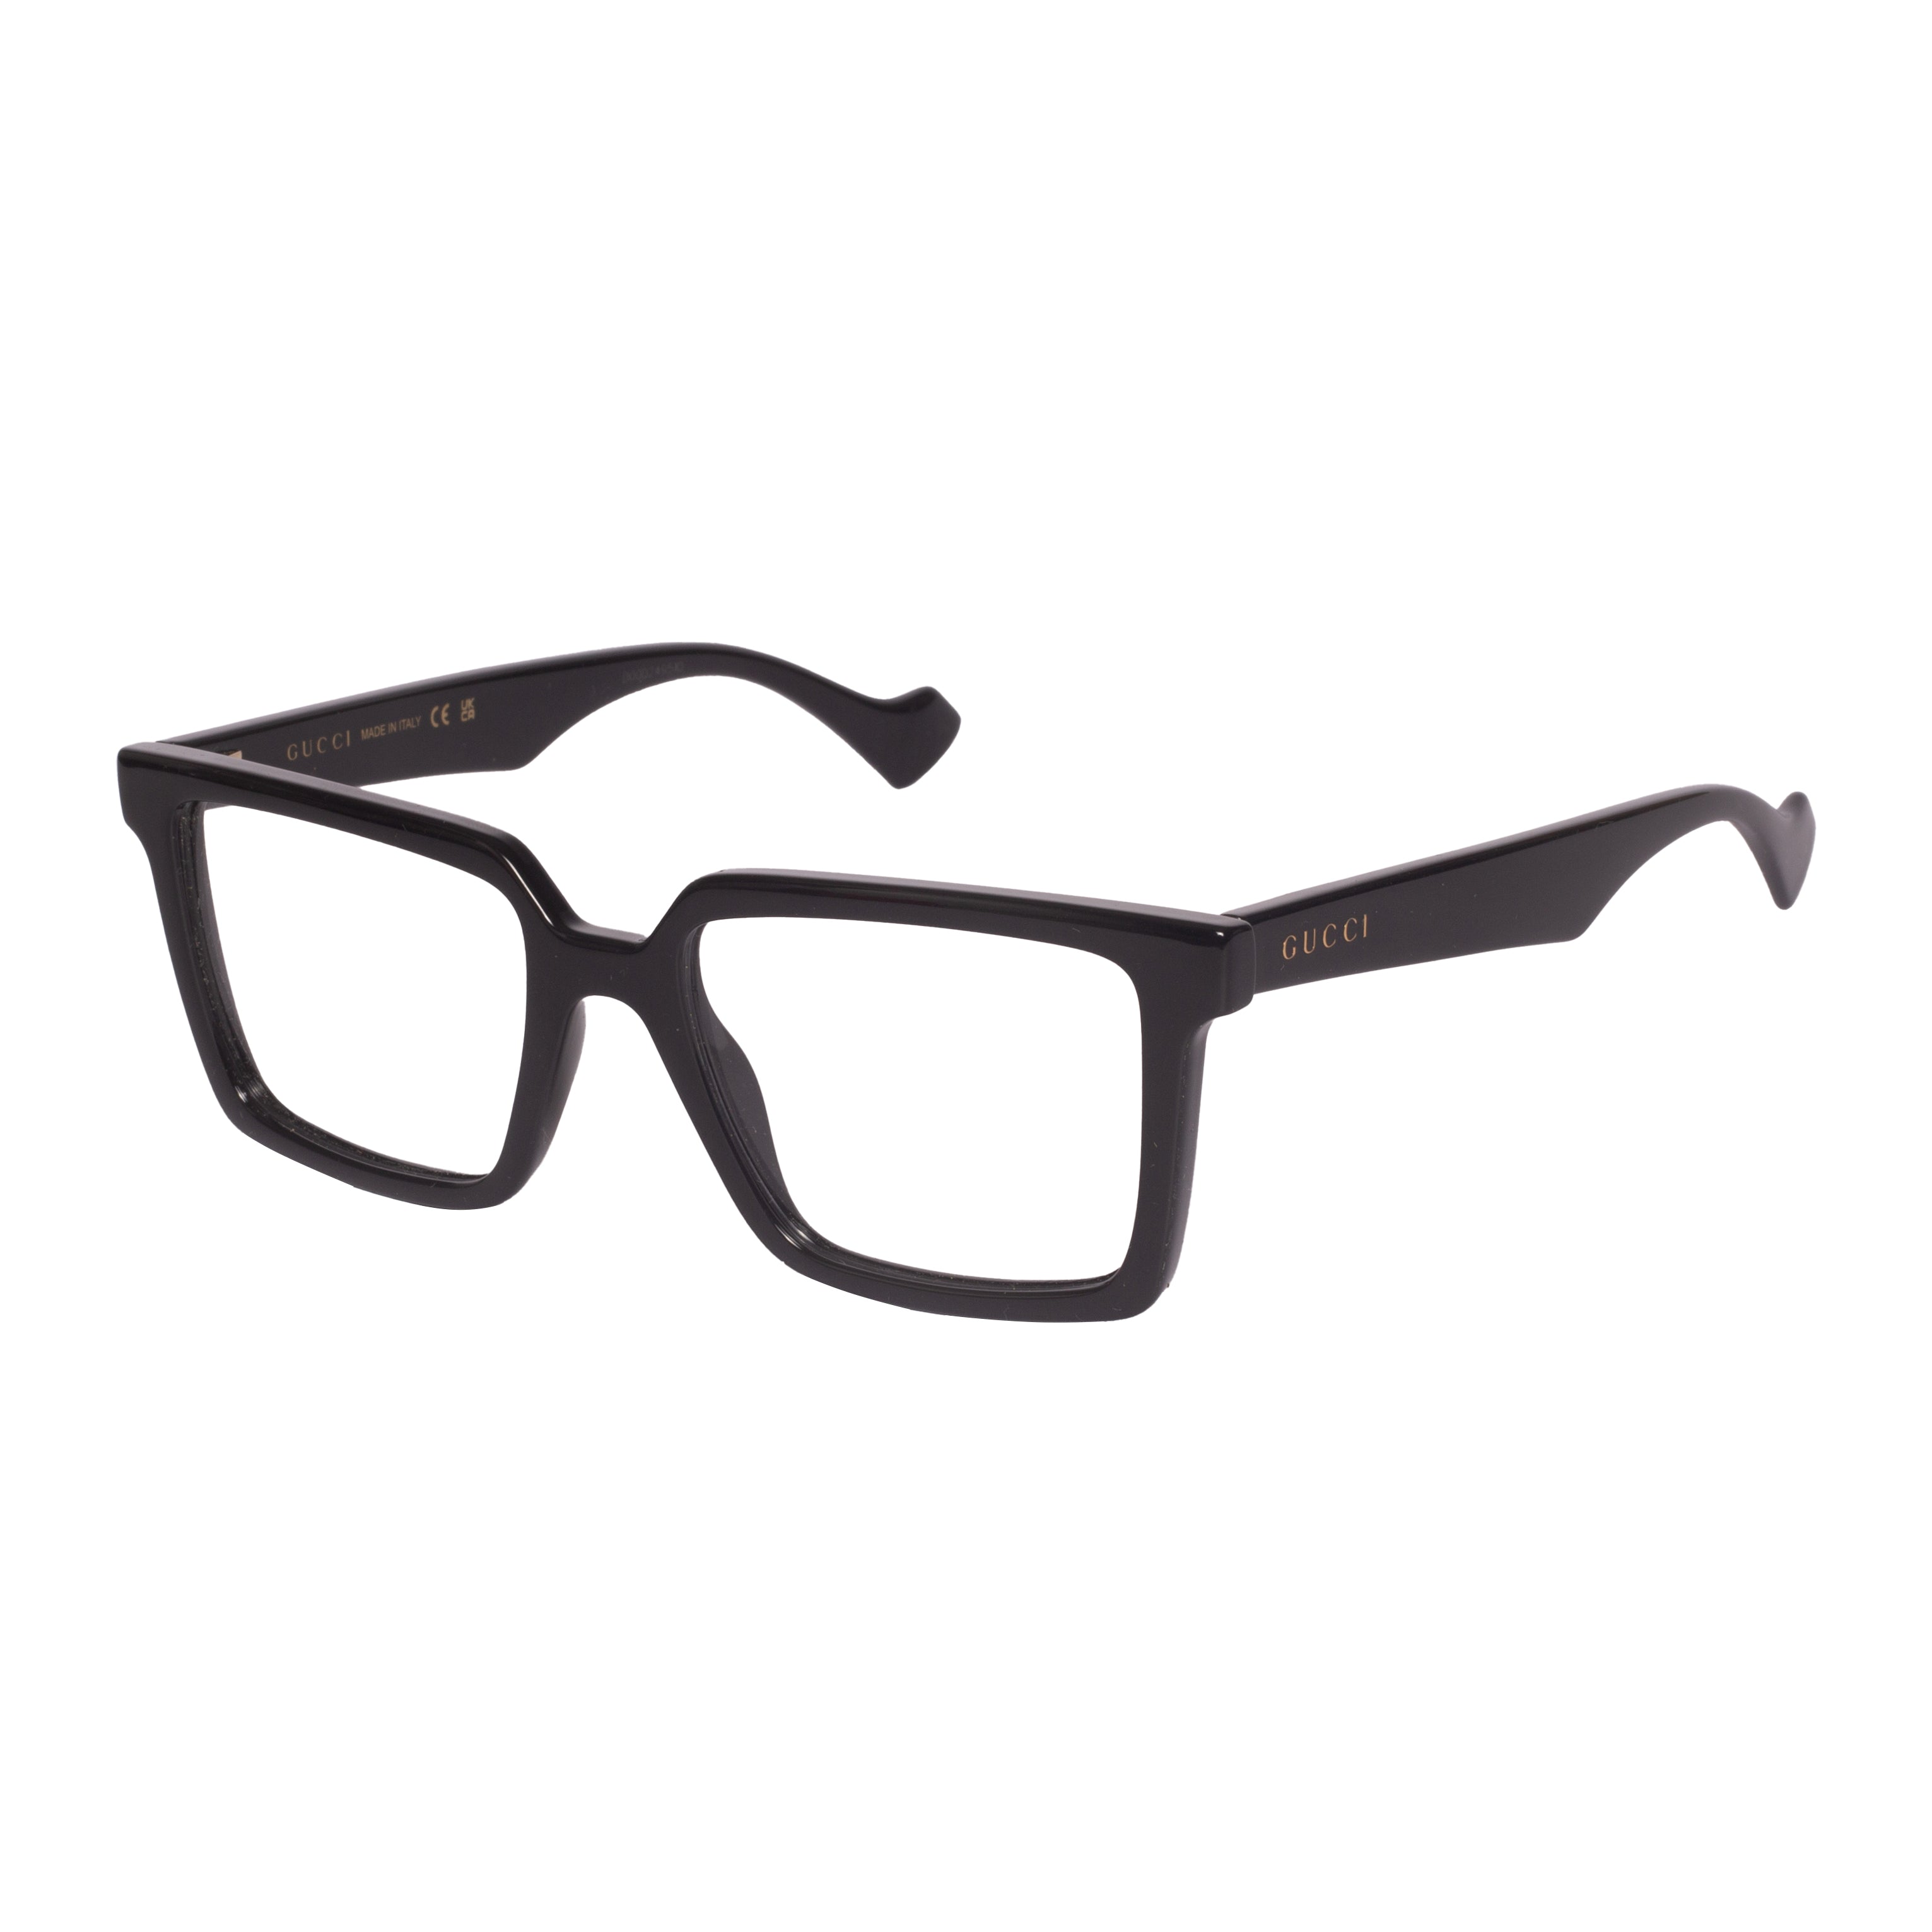 Gucci-GG1540-52-001 Eyeglasses - Premium Eyeglasses from Gucci - Just Rs. 18400! Shop now at Laxmi Opticians